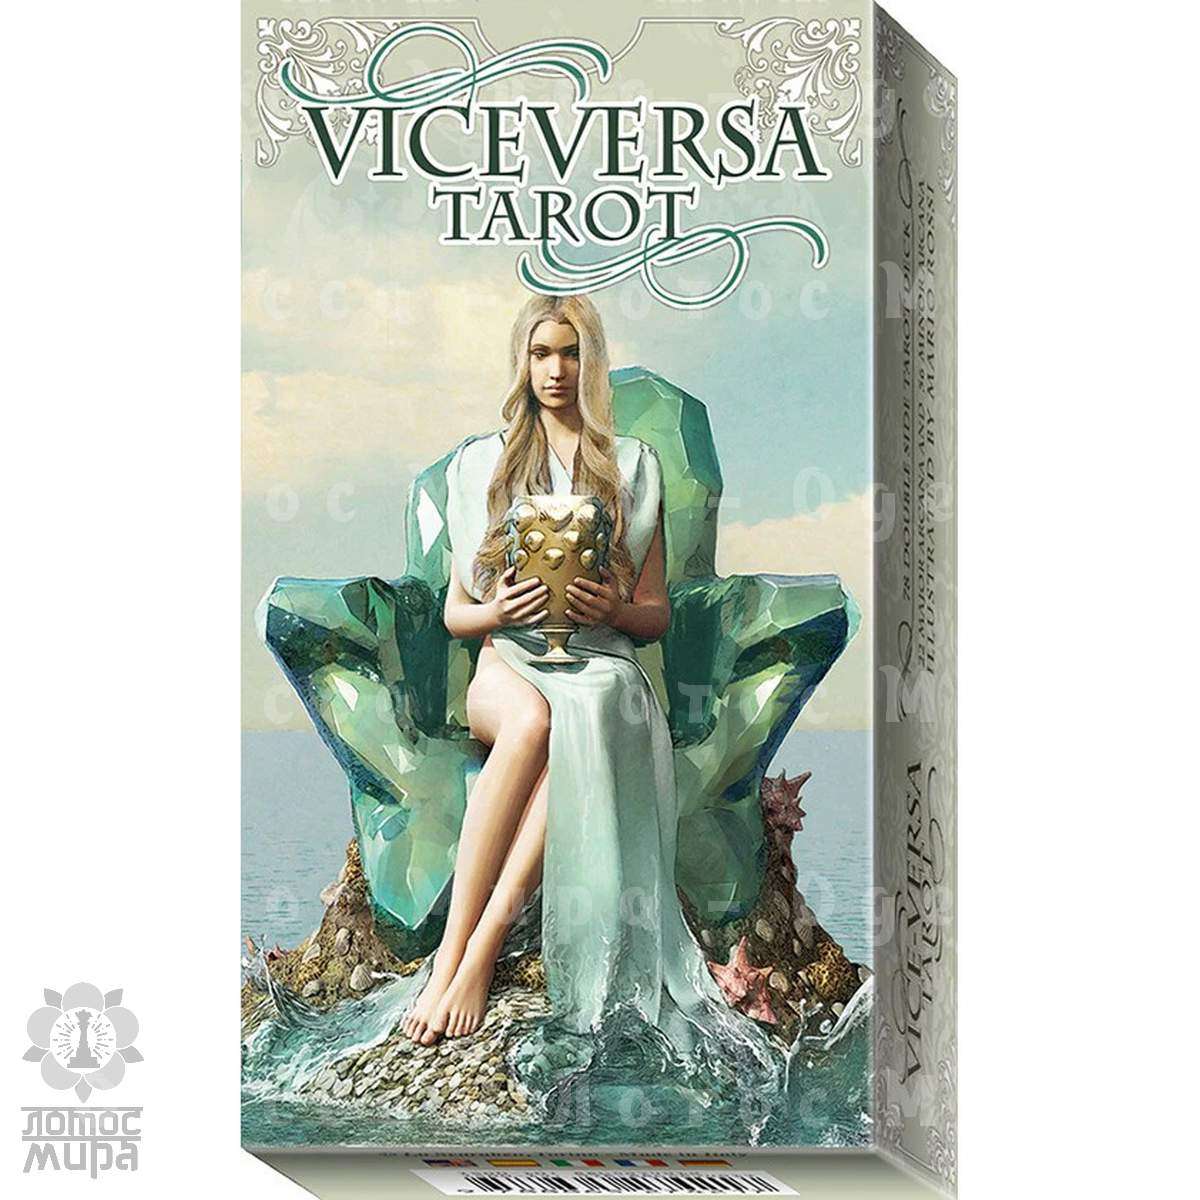 Viceversa tarot (Правителя)  /Lo Scarabeo/